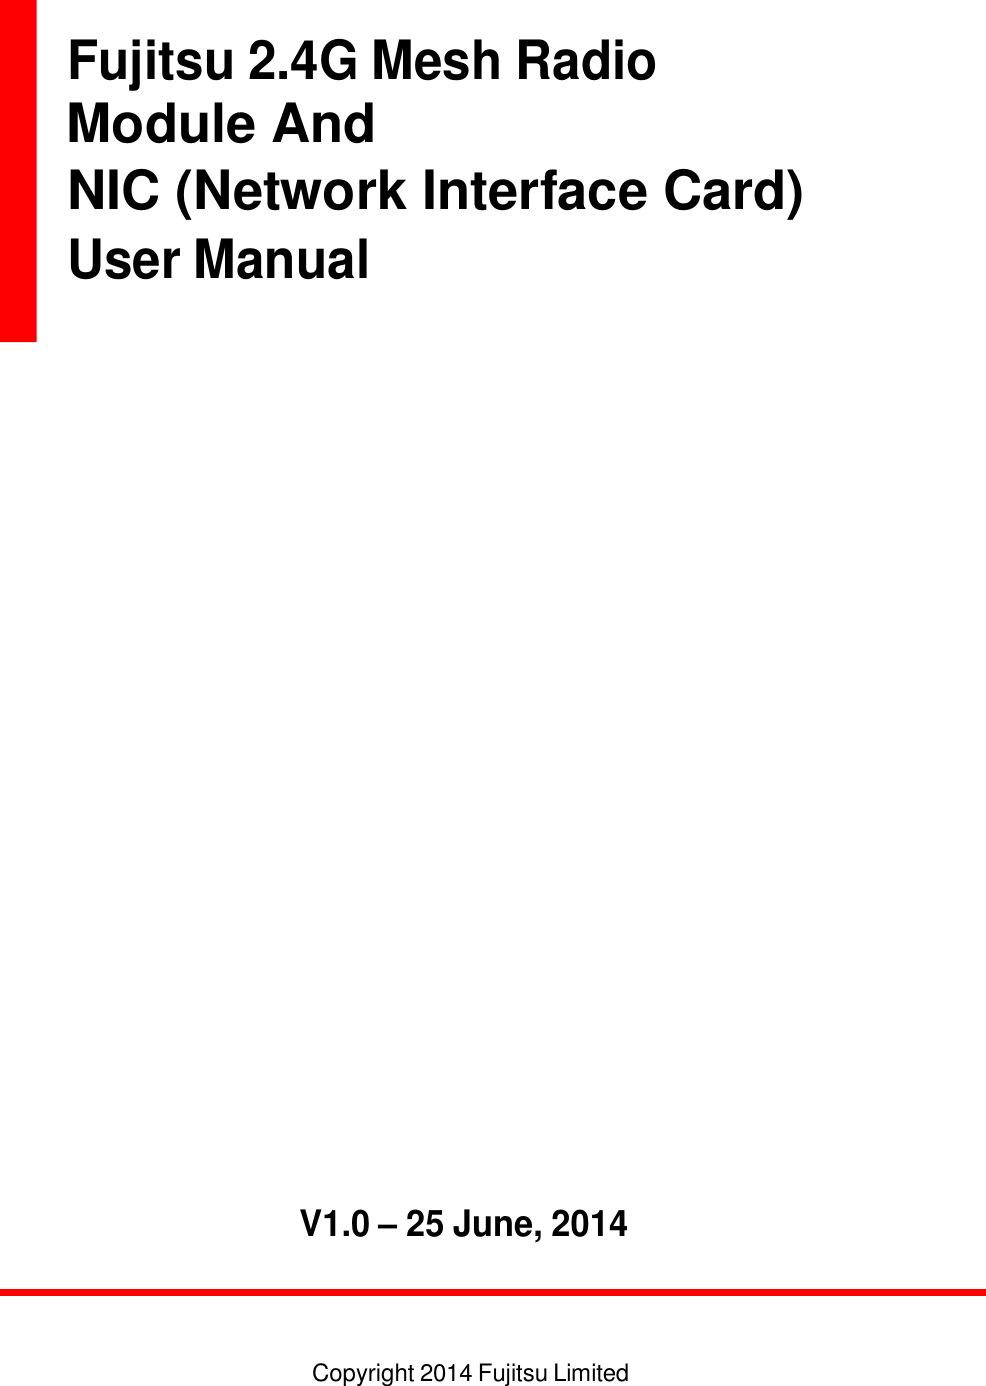             Fujitsu 2.4G Mesh Radio Module And NIC (Network Interface Card) User Manual                                     V1.0 – 25 June, 2014     Copyright 2014 Fujitsu Limited